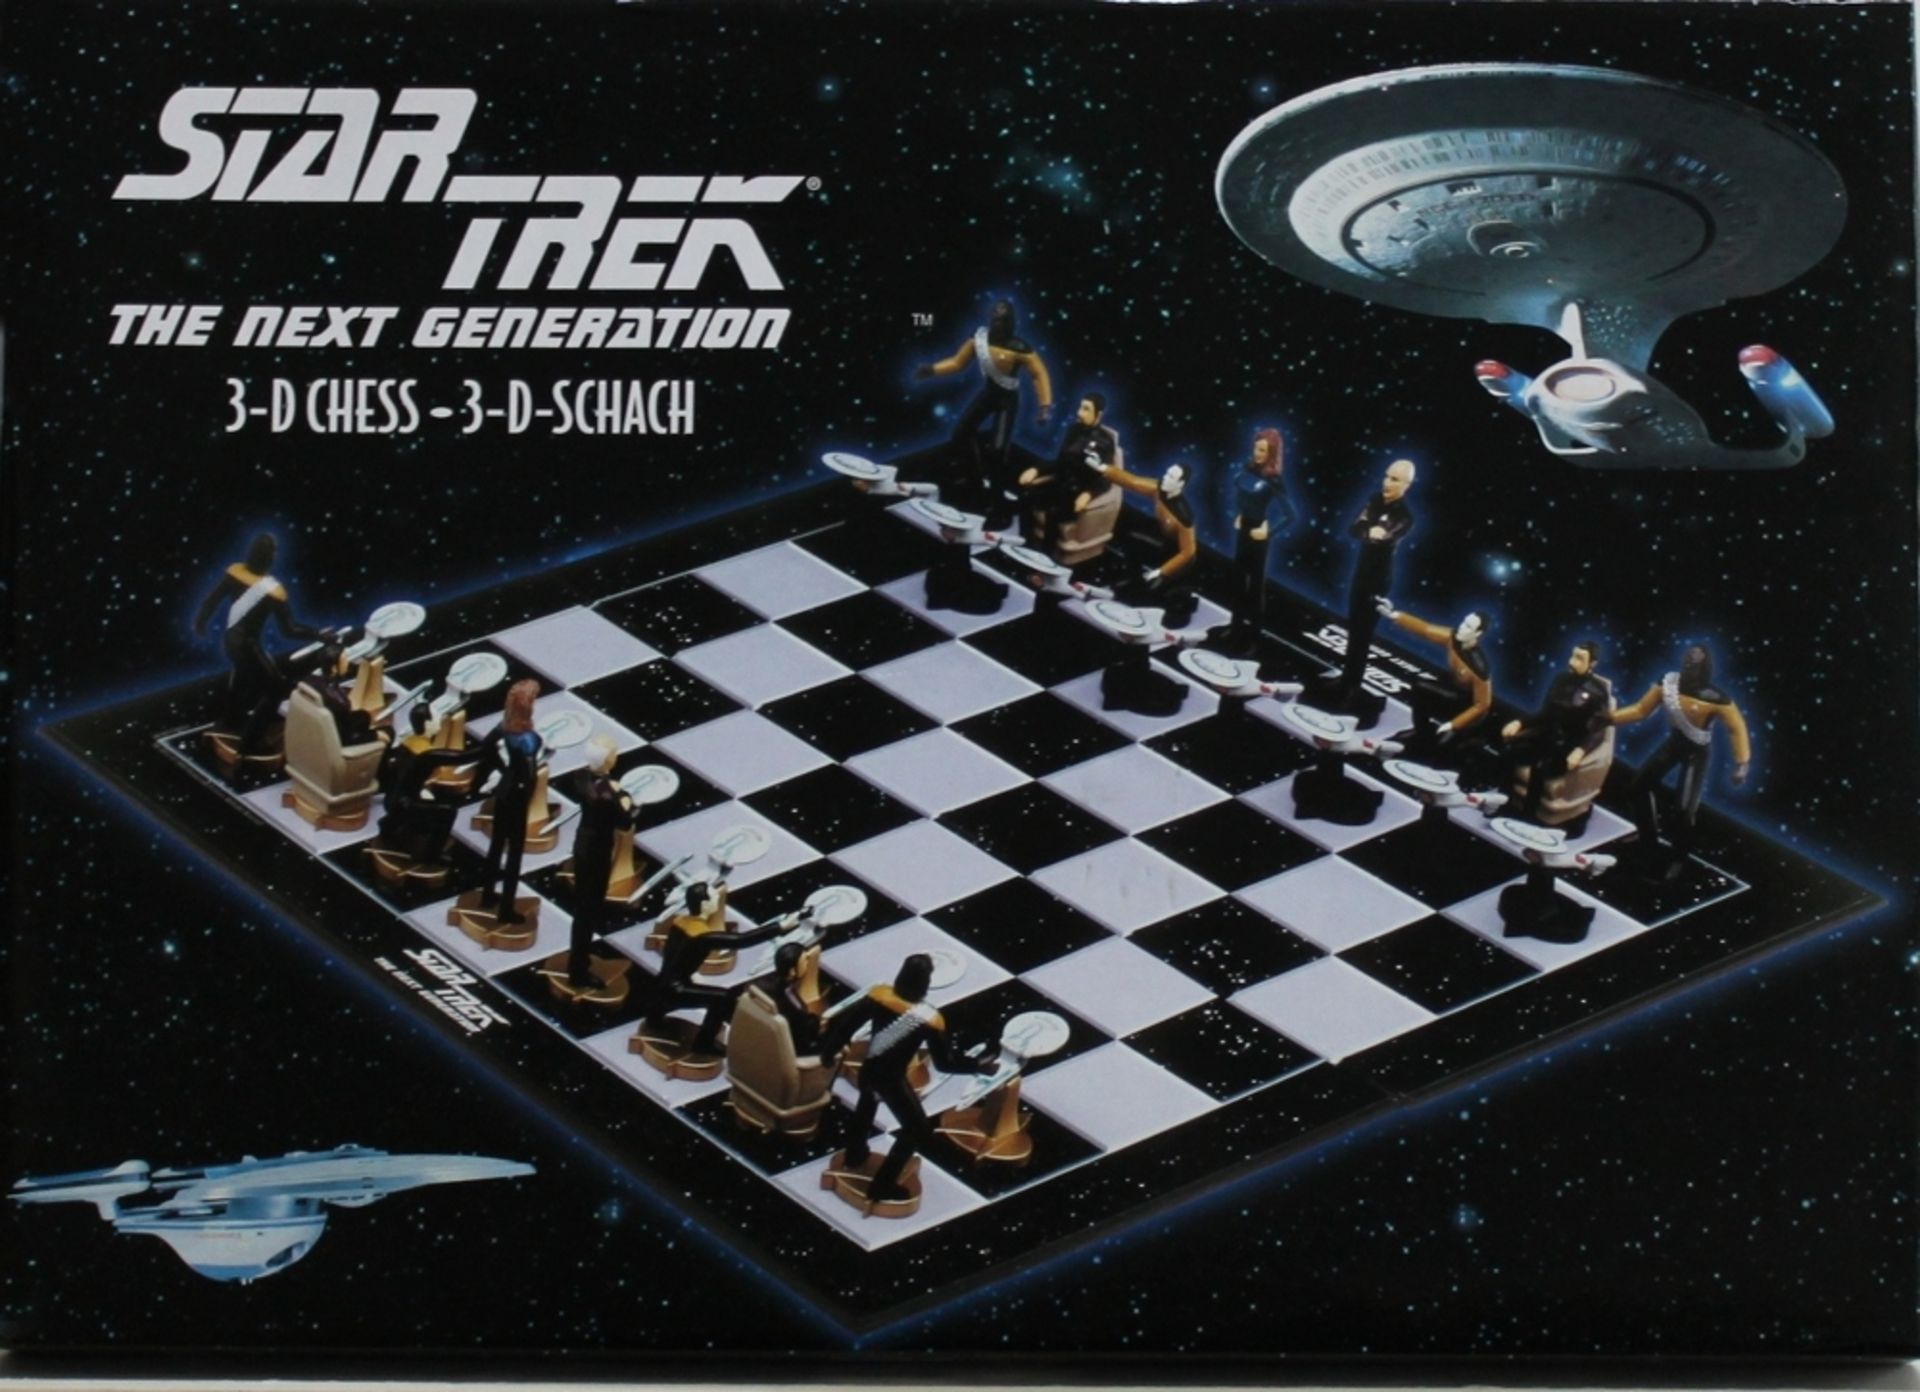 Europa. Deutschland. Star - Trek – The Next Generation 3-D Chess 3-D Schach. 32 Schachfiguren nach